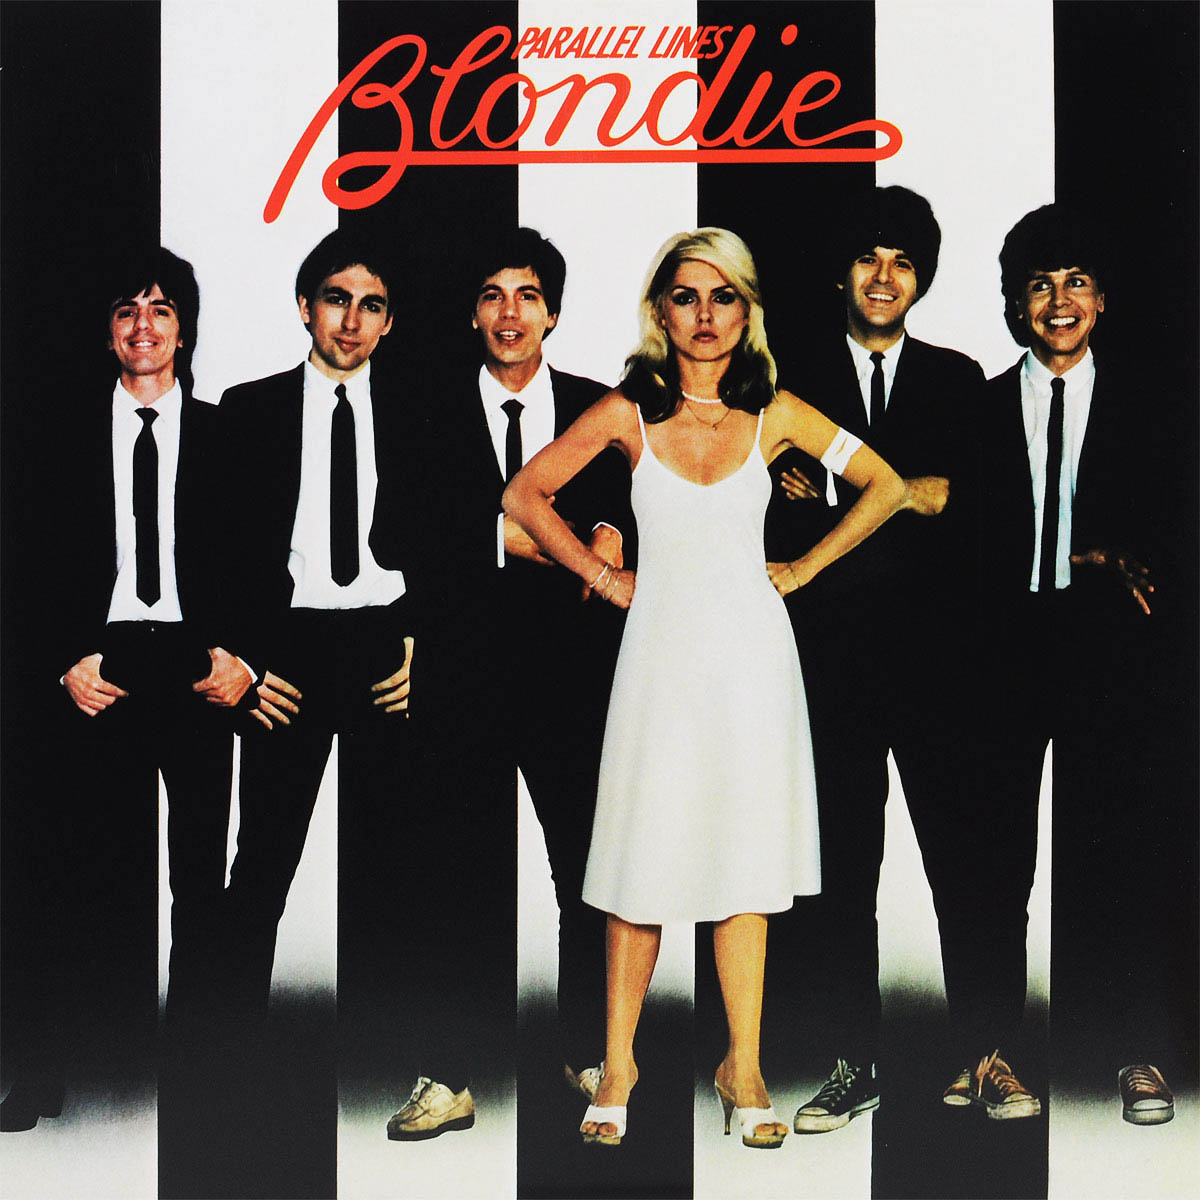 Обложка альбома «Blondie» «Parallel Lines» (1978)